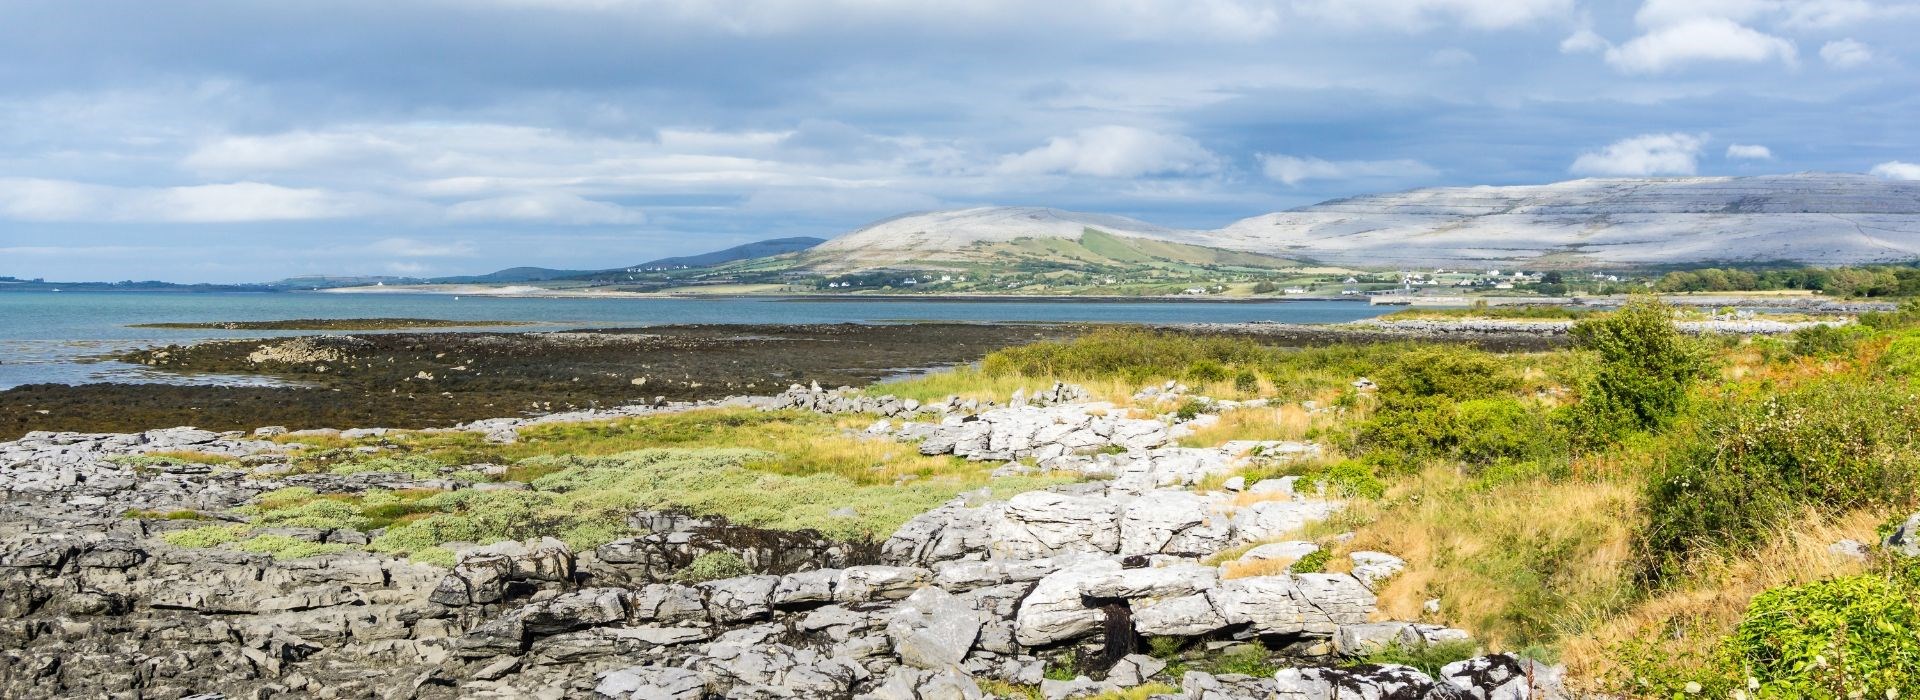 Visiter Le Burren - Irlande